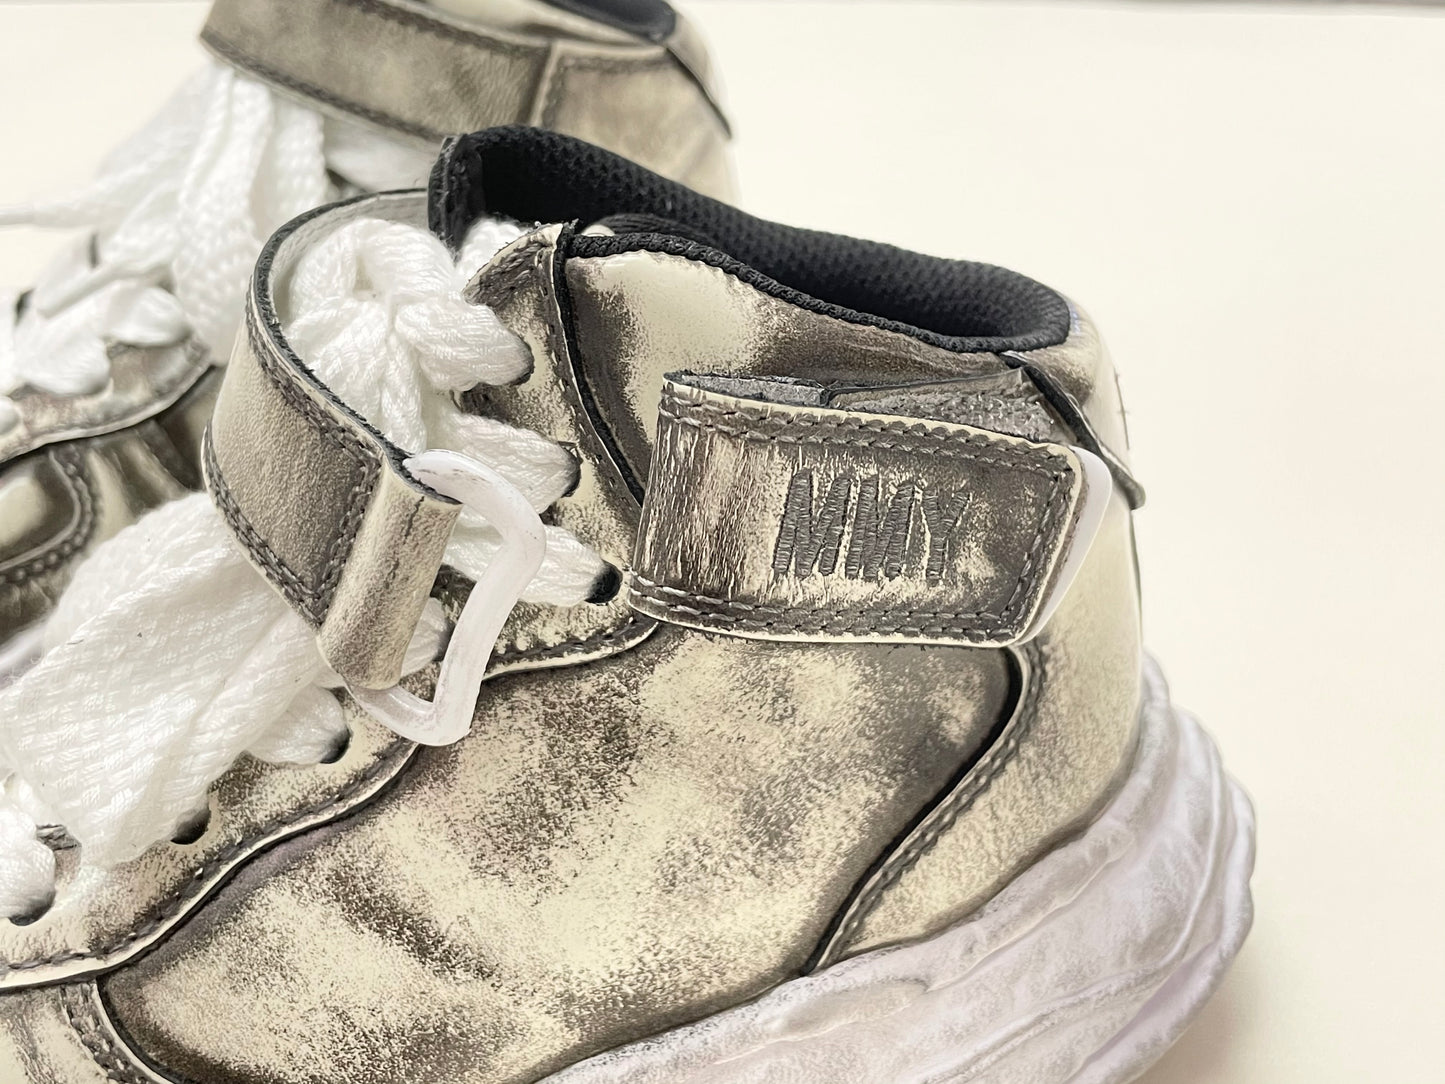 〖 Special Order 〗Maison Mihara Yasuhiro Brushed Patent Leather OG Sole Sneaker - Wayne High